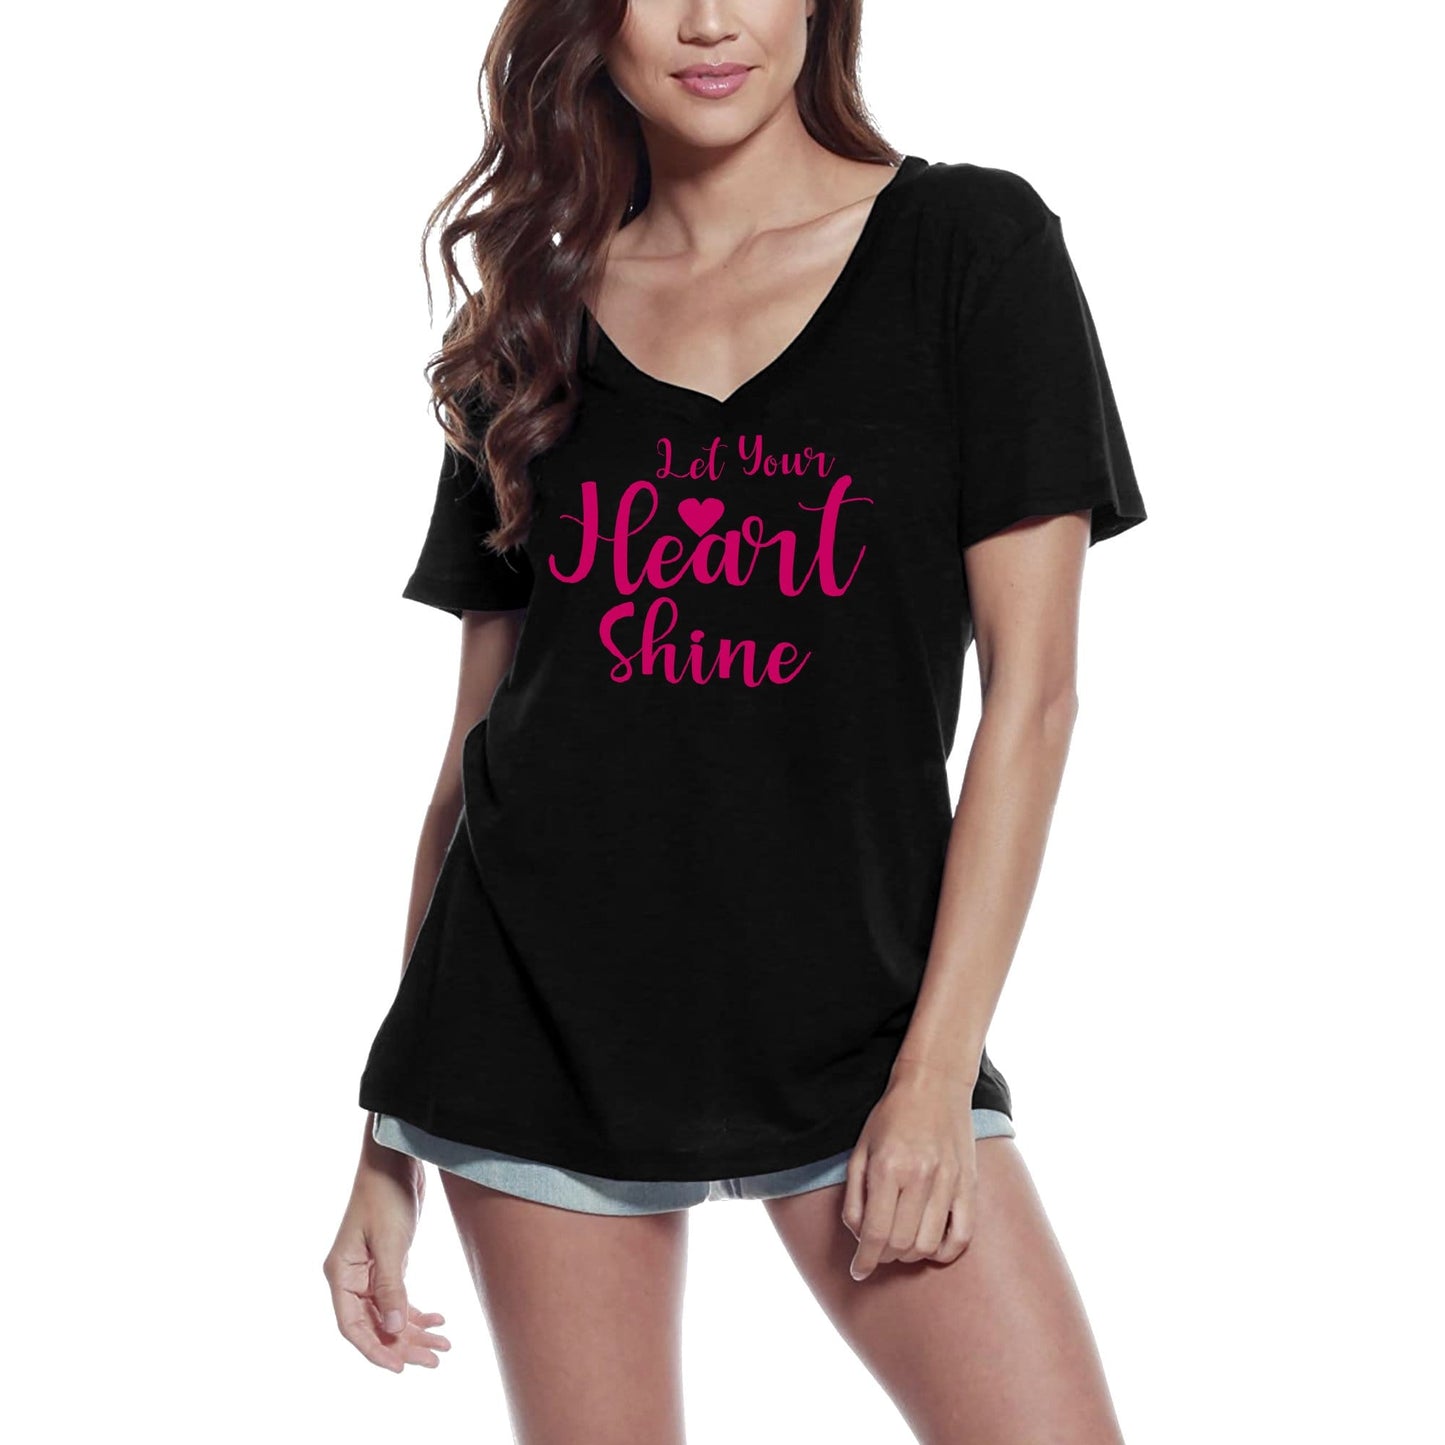 ULTRABASIC Women's T-Shirt Let Your Heart Shine - Short Sleeve Tee Shirt Gift Tops